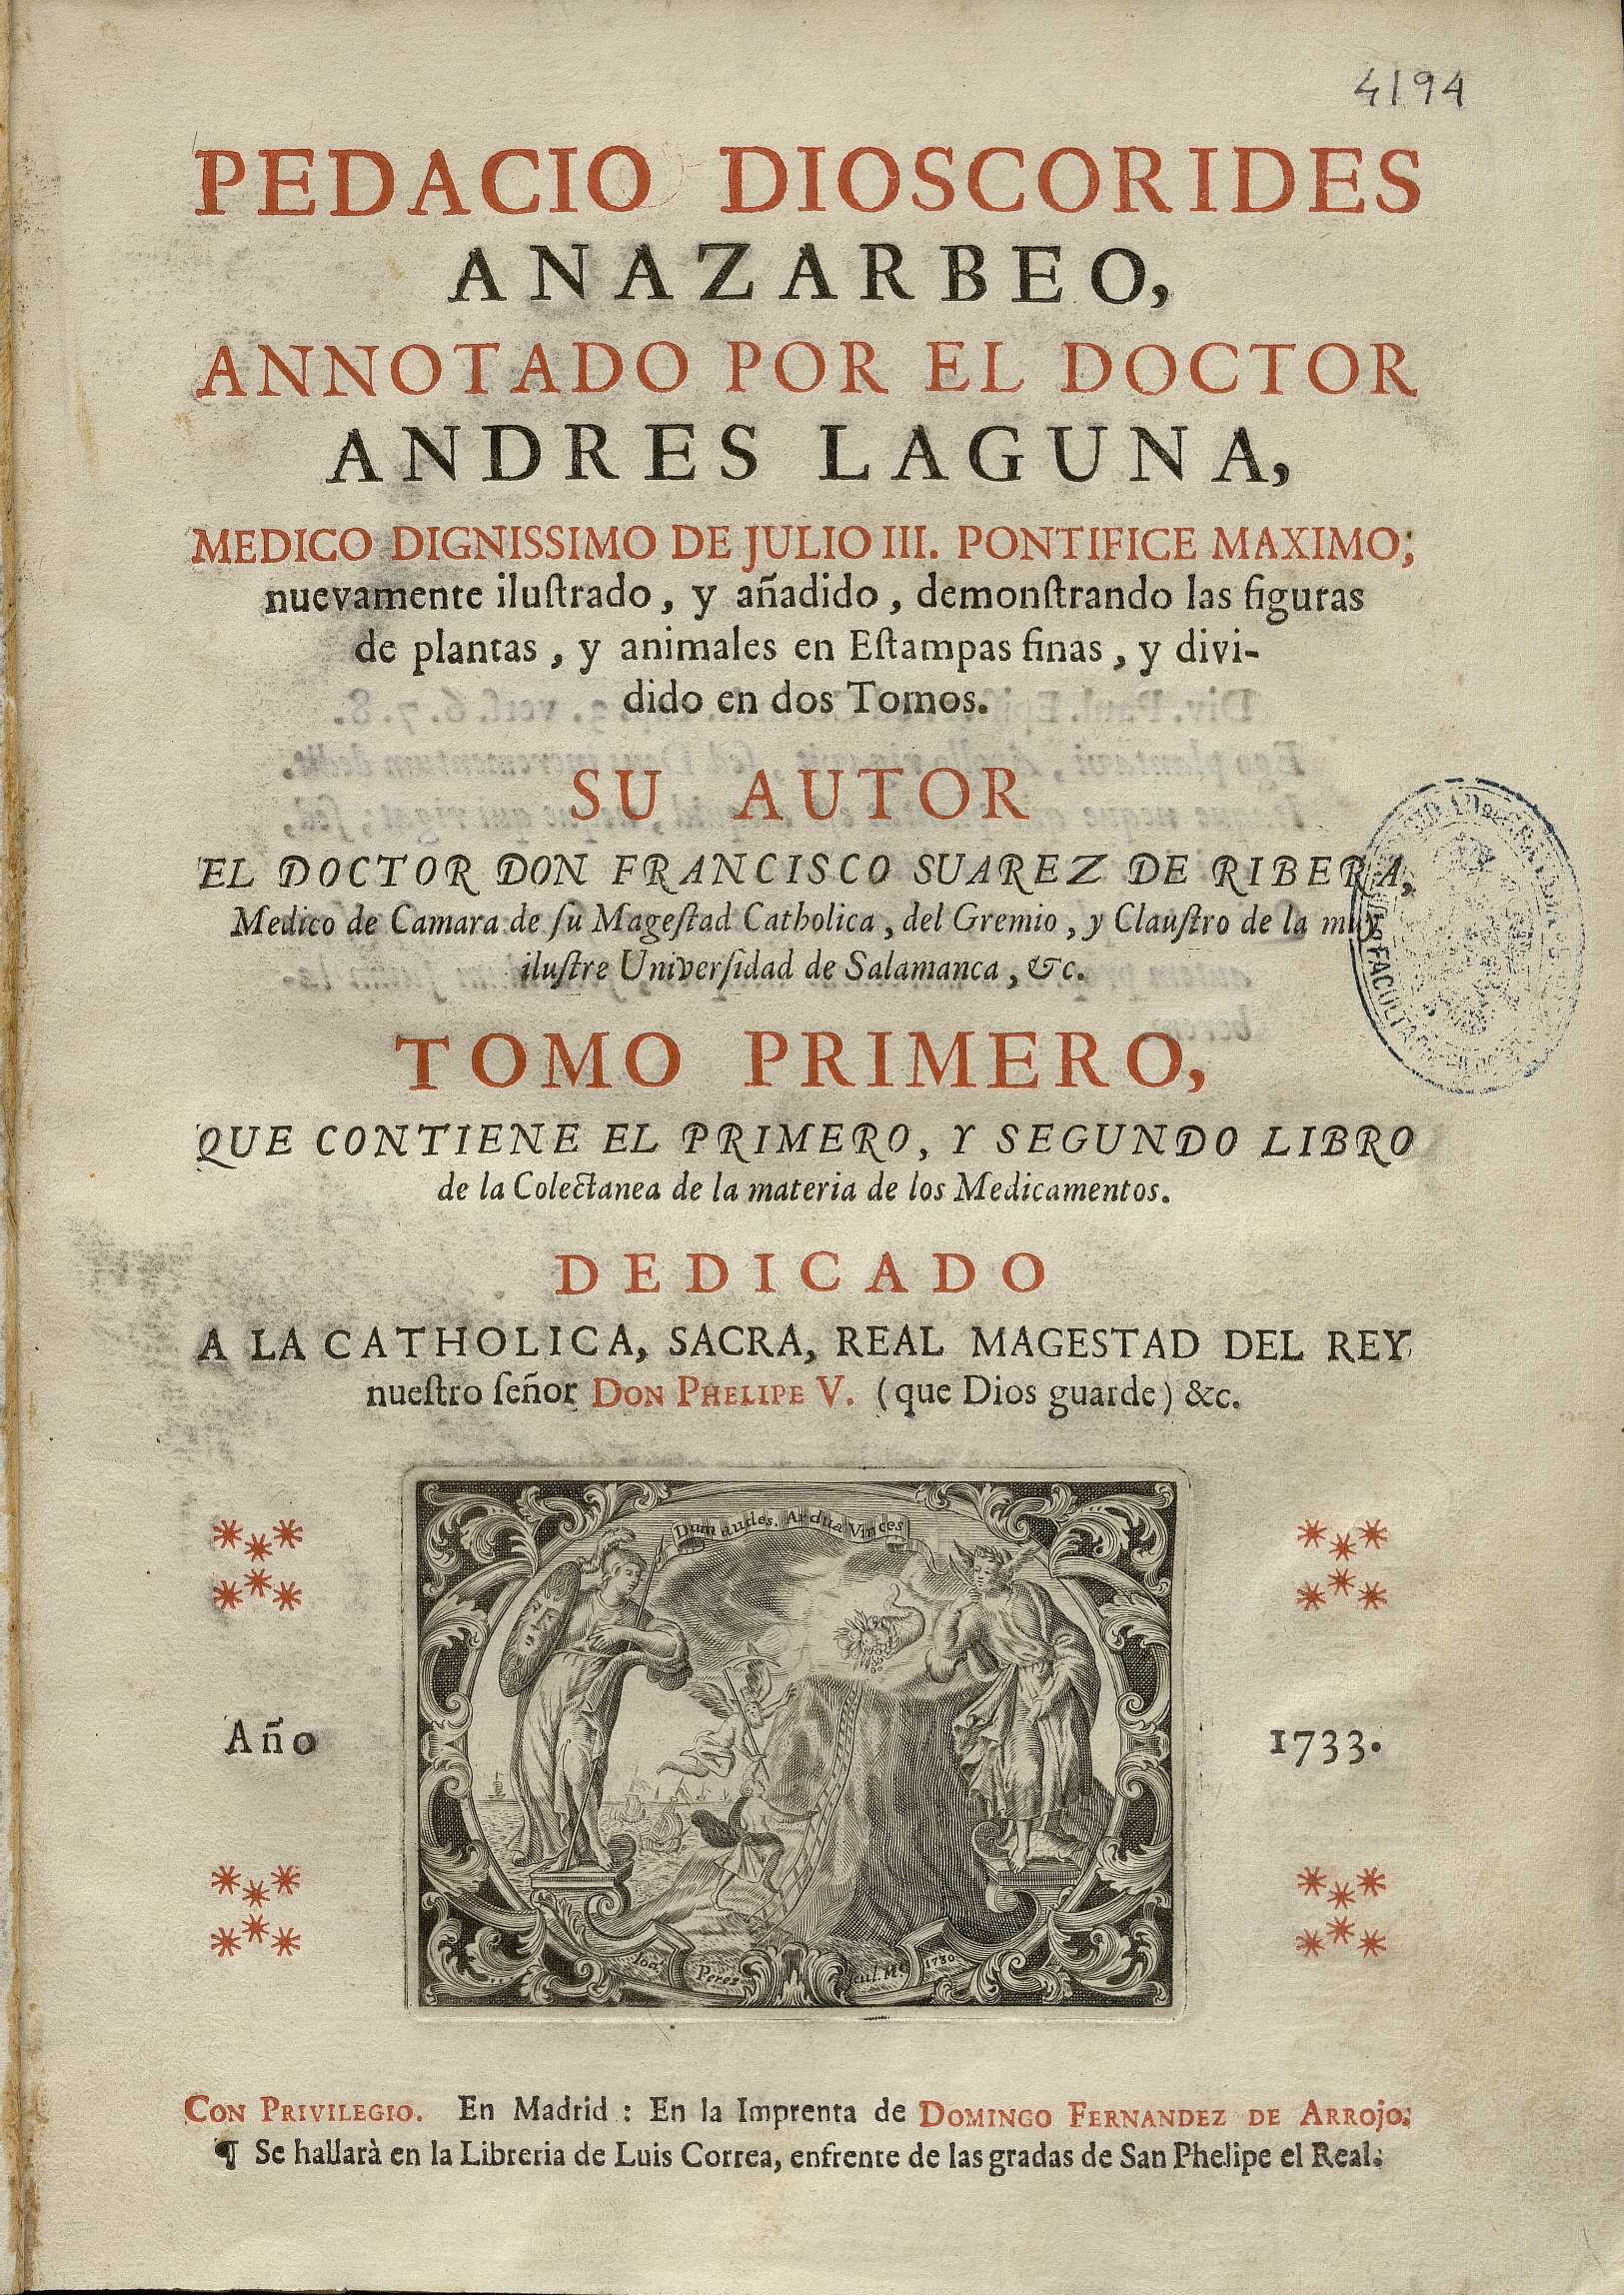 Suarez de Ribera, Francisco, c.1680-1754